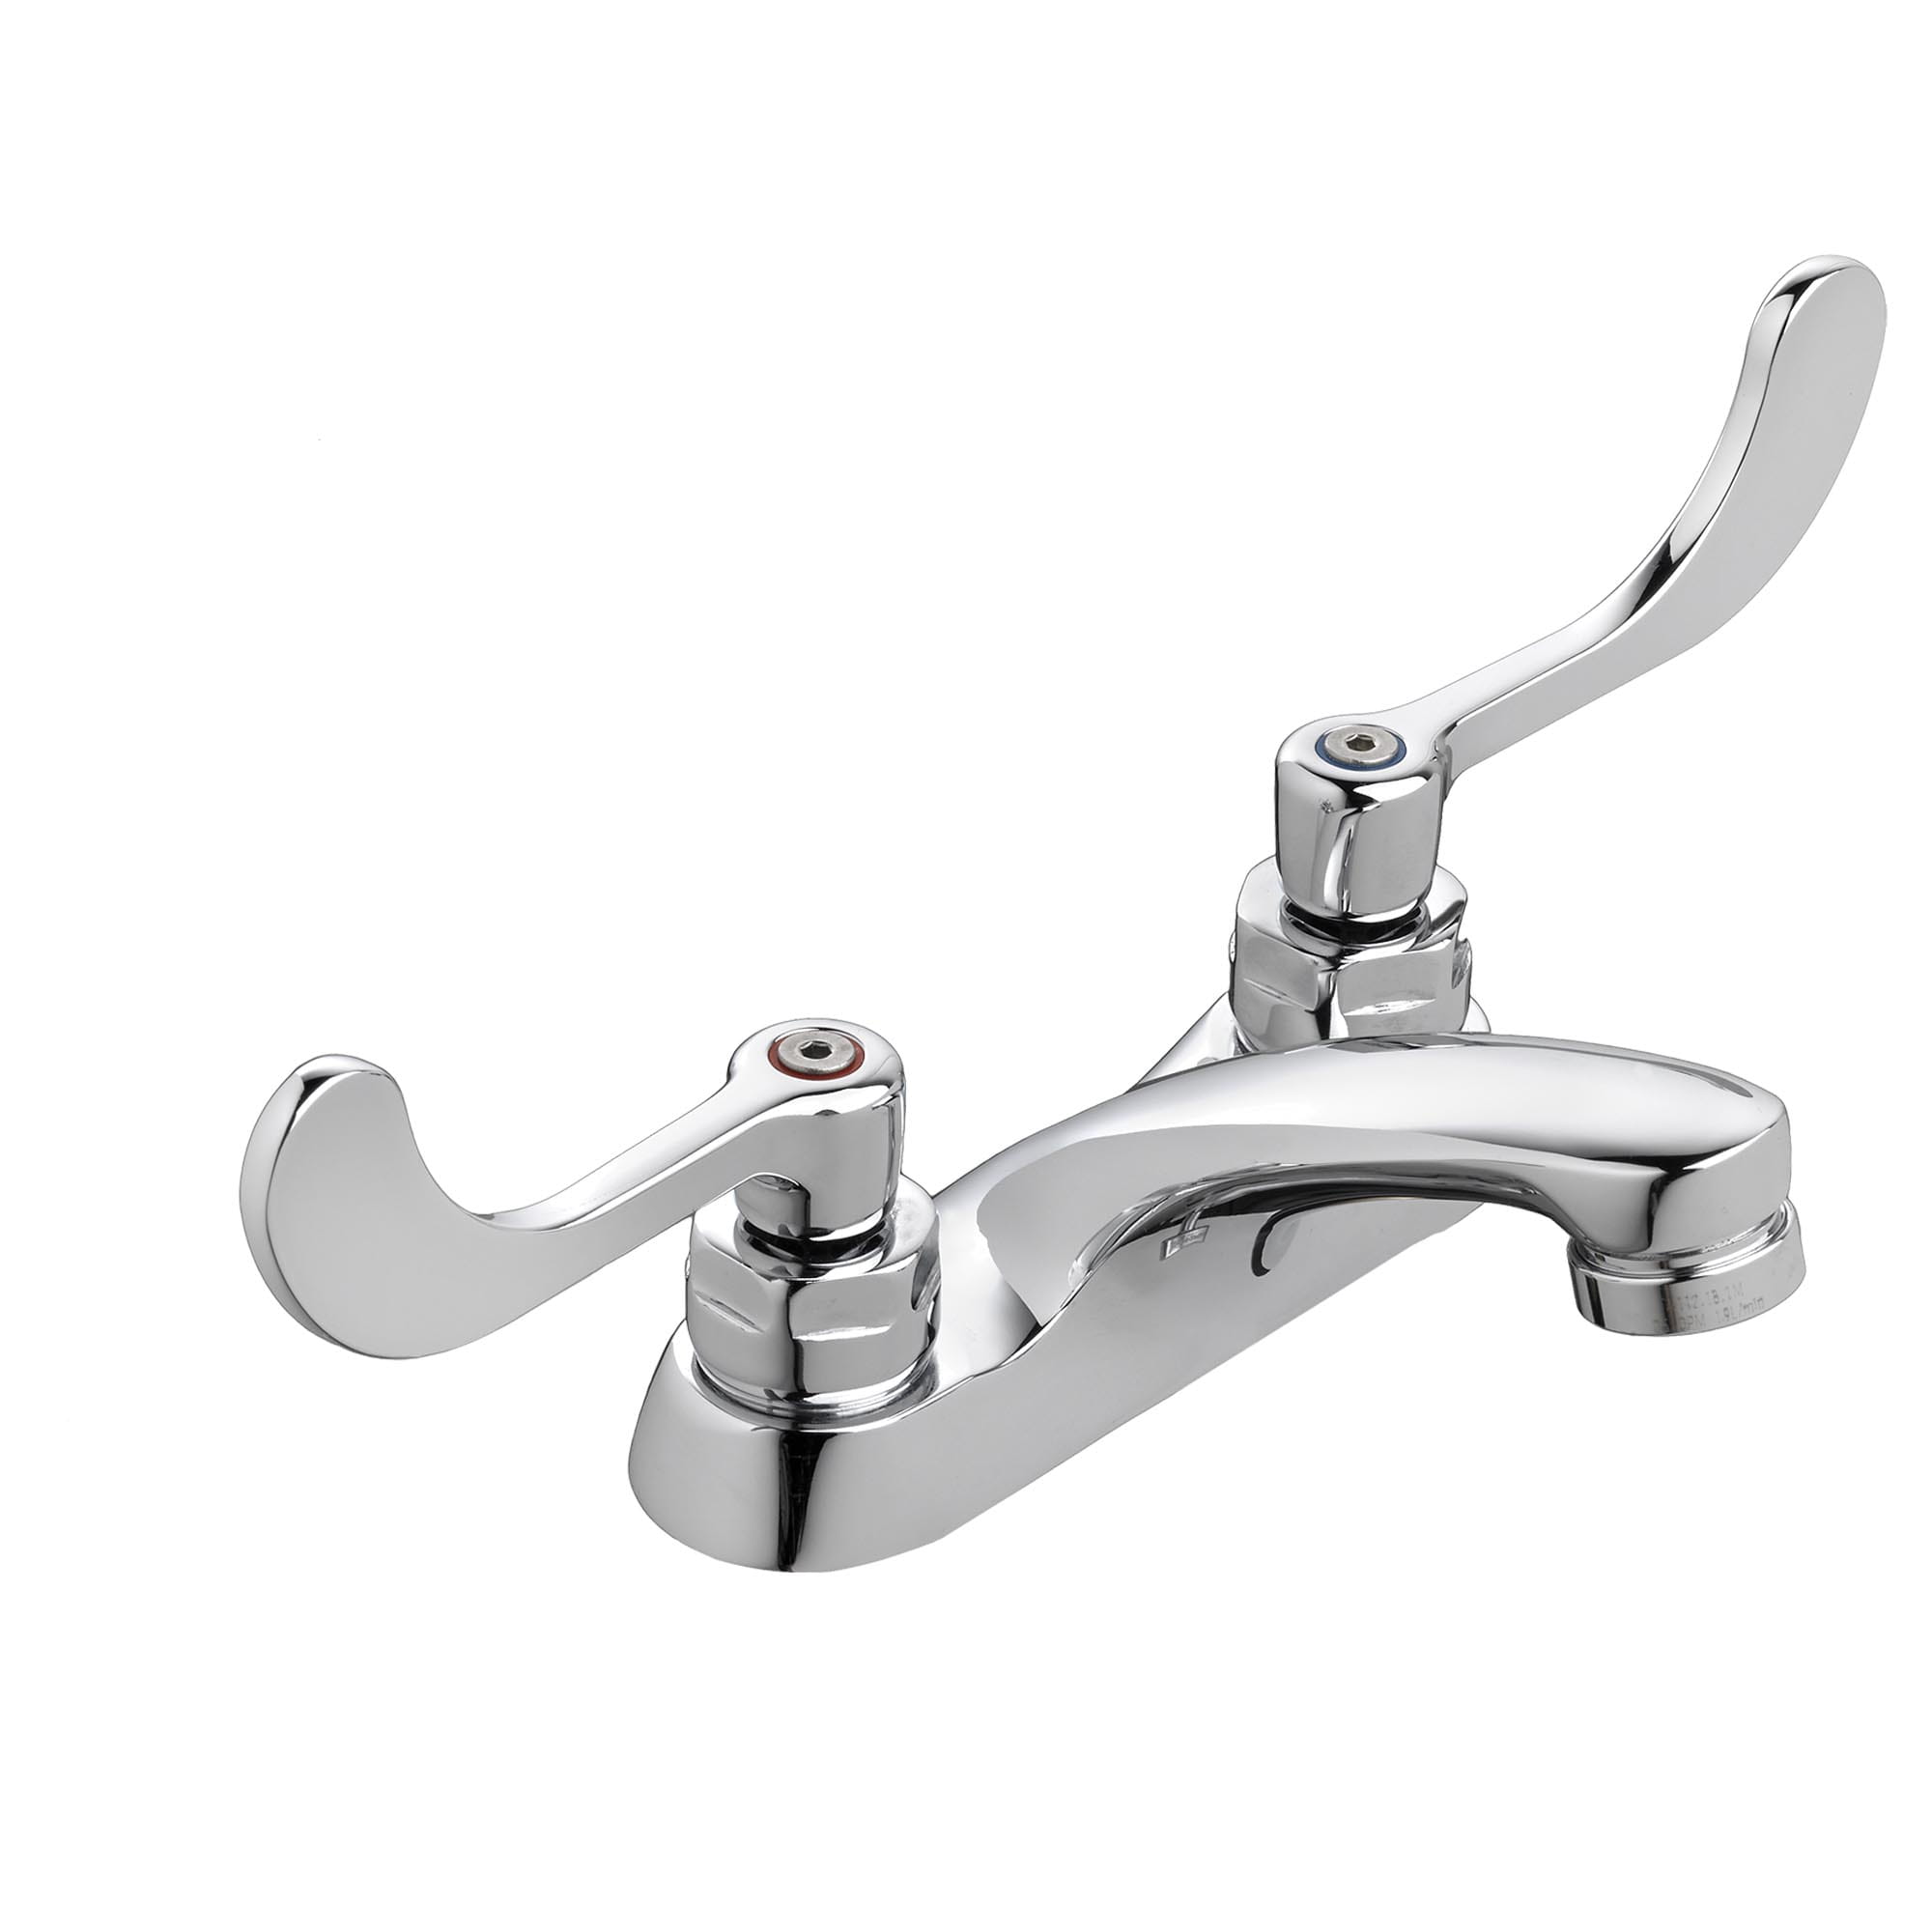 Monterrey® 4-Inch Centerset Cast Faucet With Wrist Blade Handles 0.5 gpm/1.9 Lpm